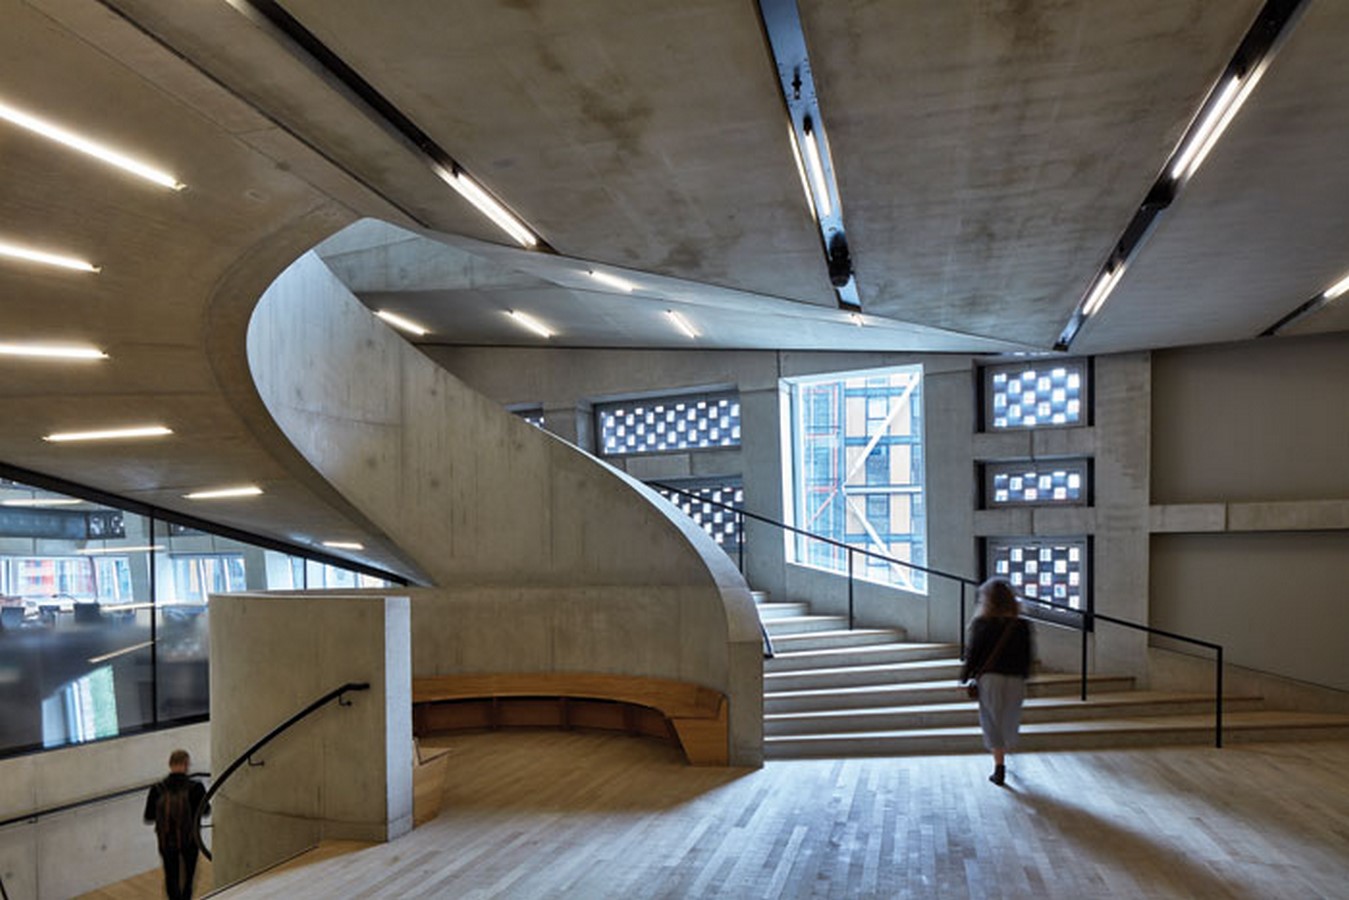 Tate Modern Switch House by Herzog & de Meuron: Model museums of the 21st century - Sheet5